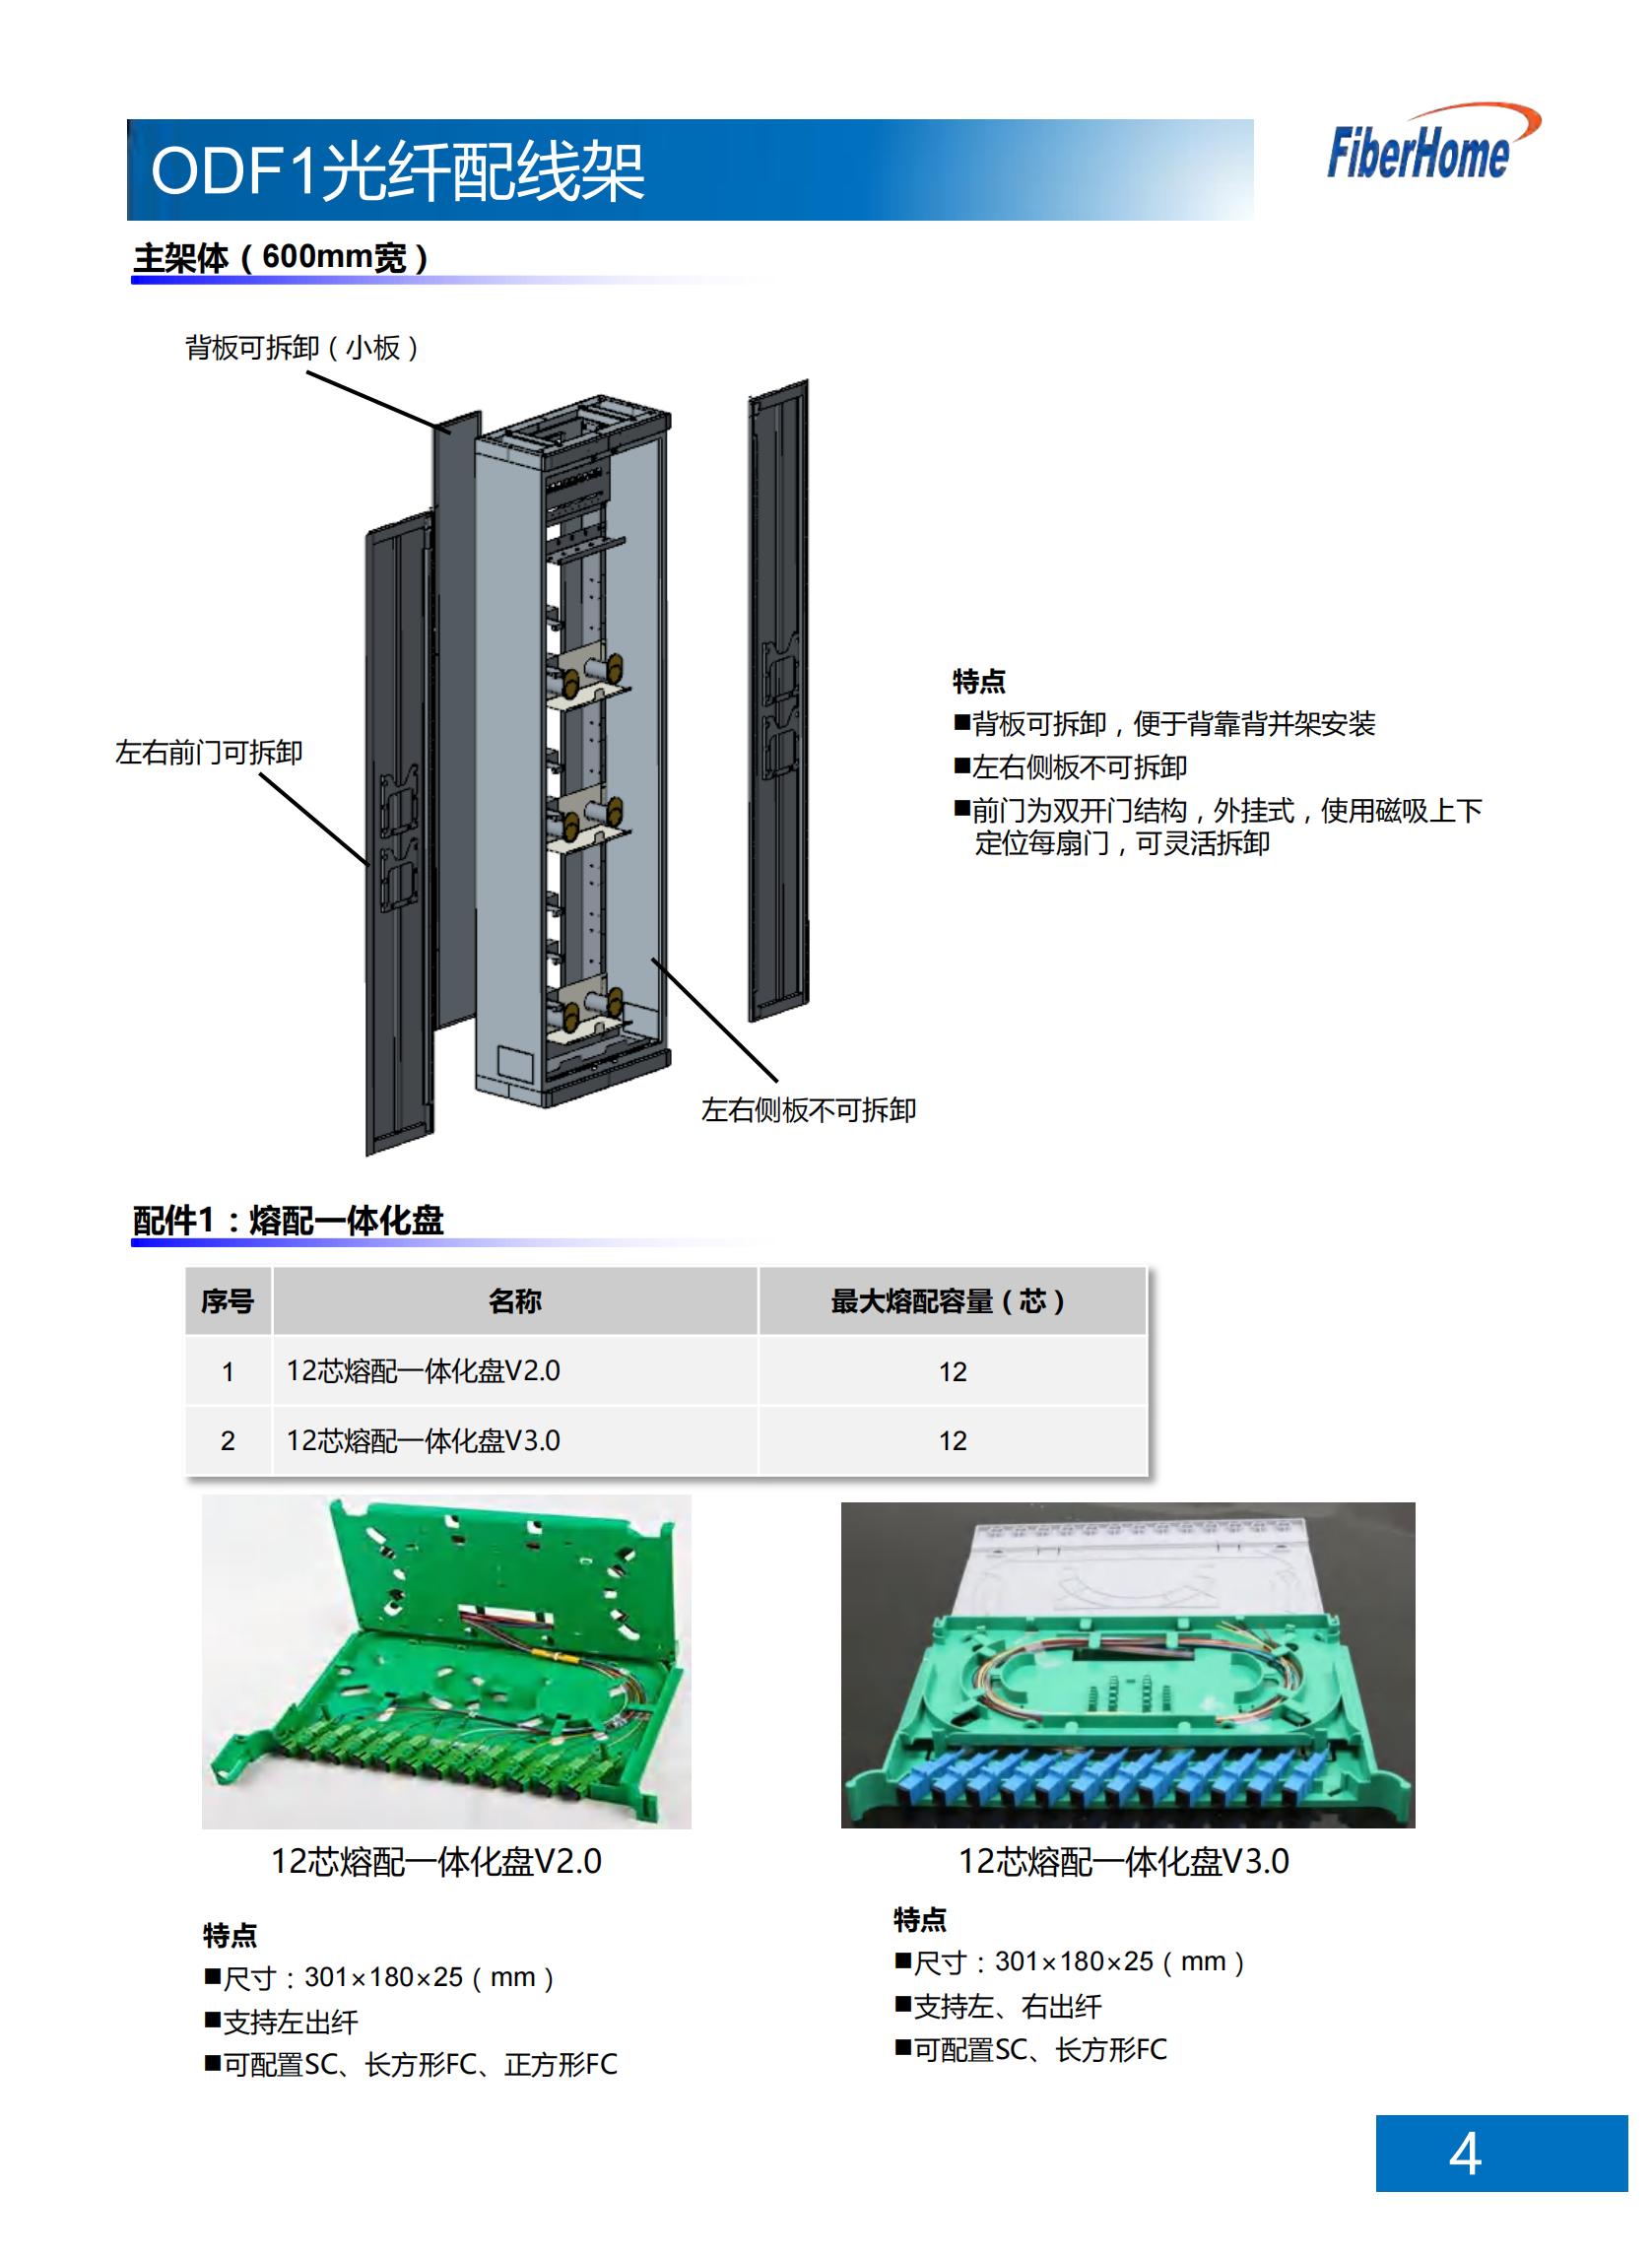 ODF101-1152-A4-LC ODF光纤配线架 （576芯落地式 全部含24芯LC熔配一体化单元） 带储纤单元）